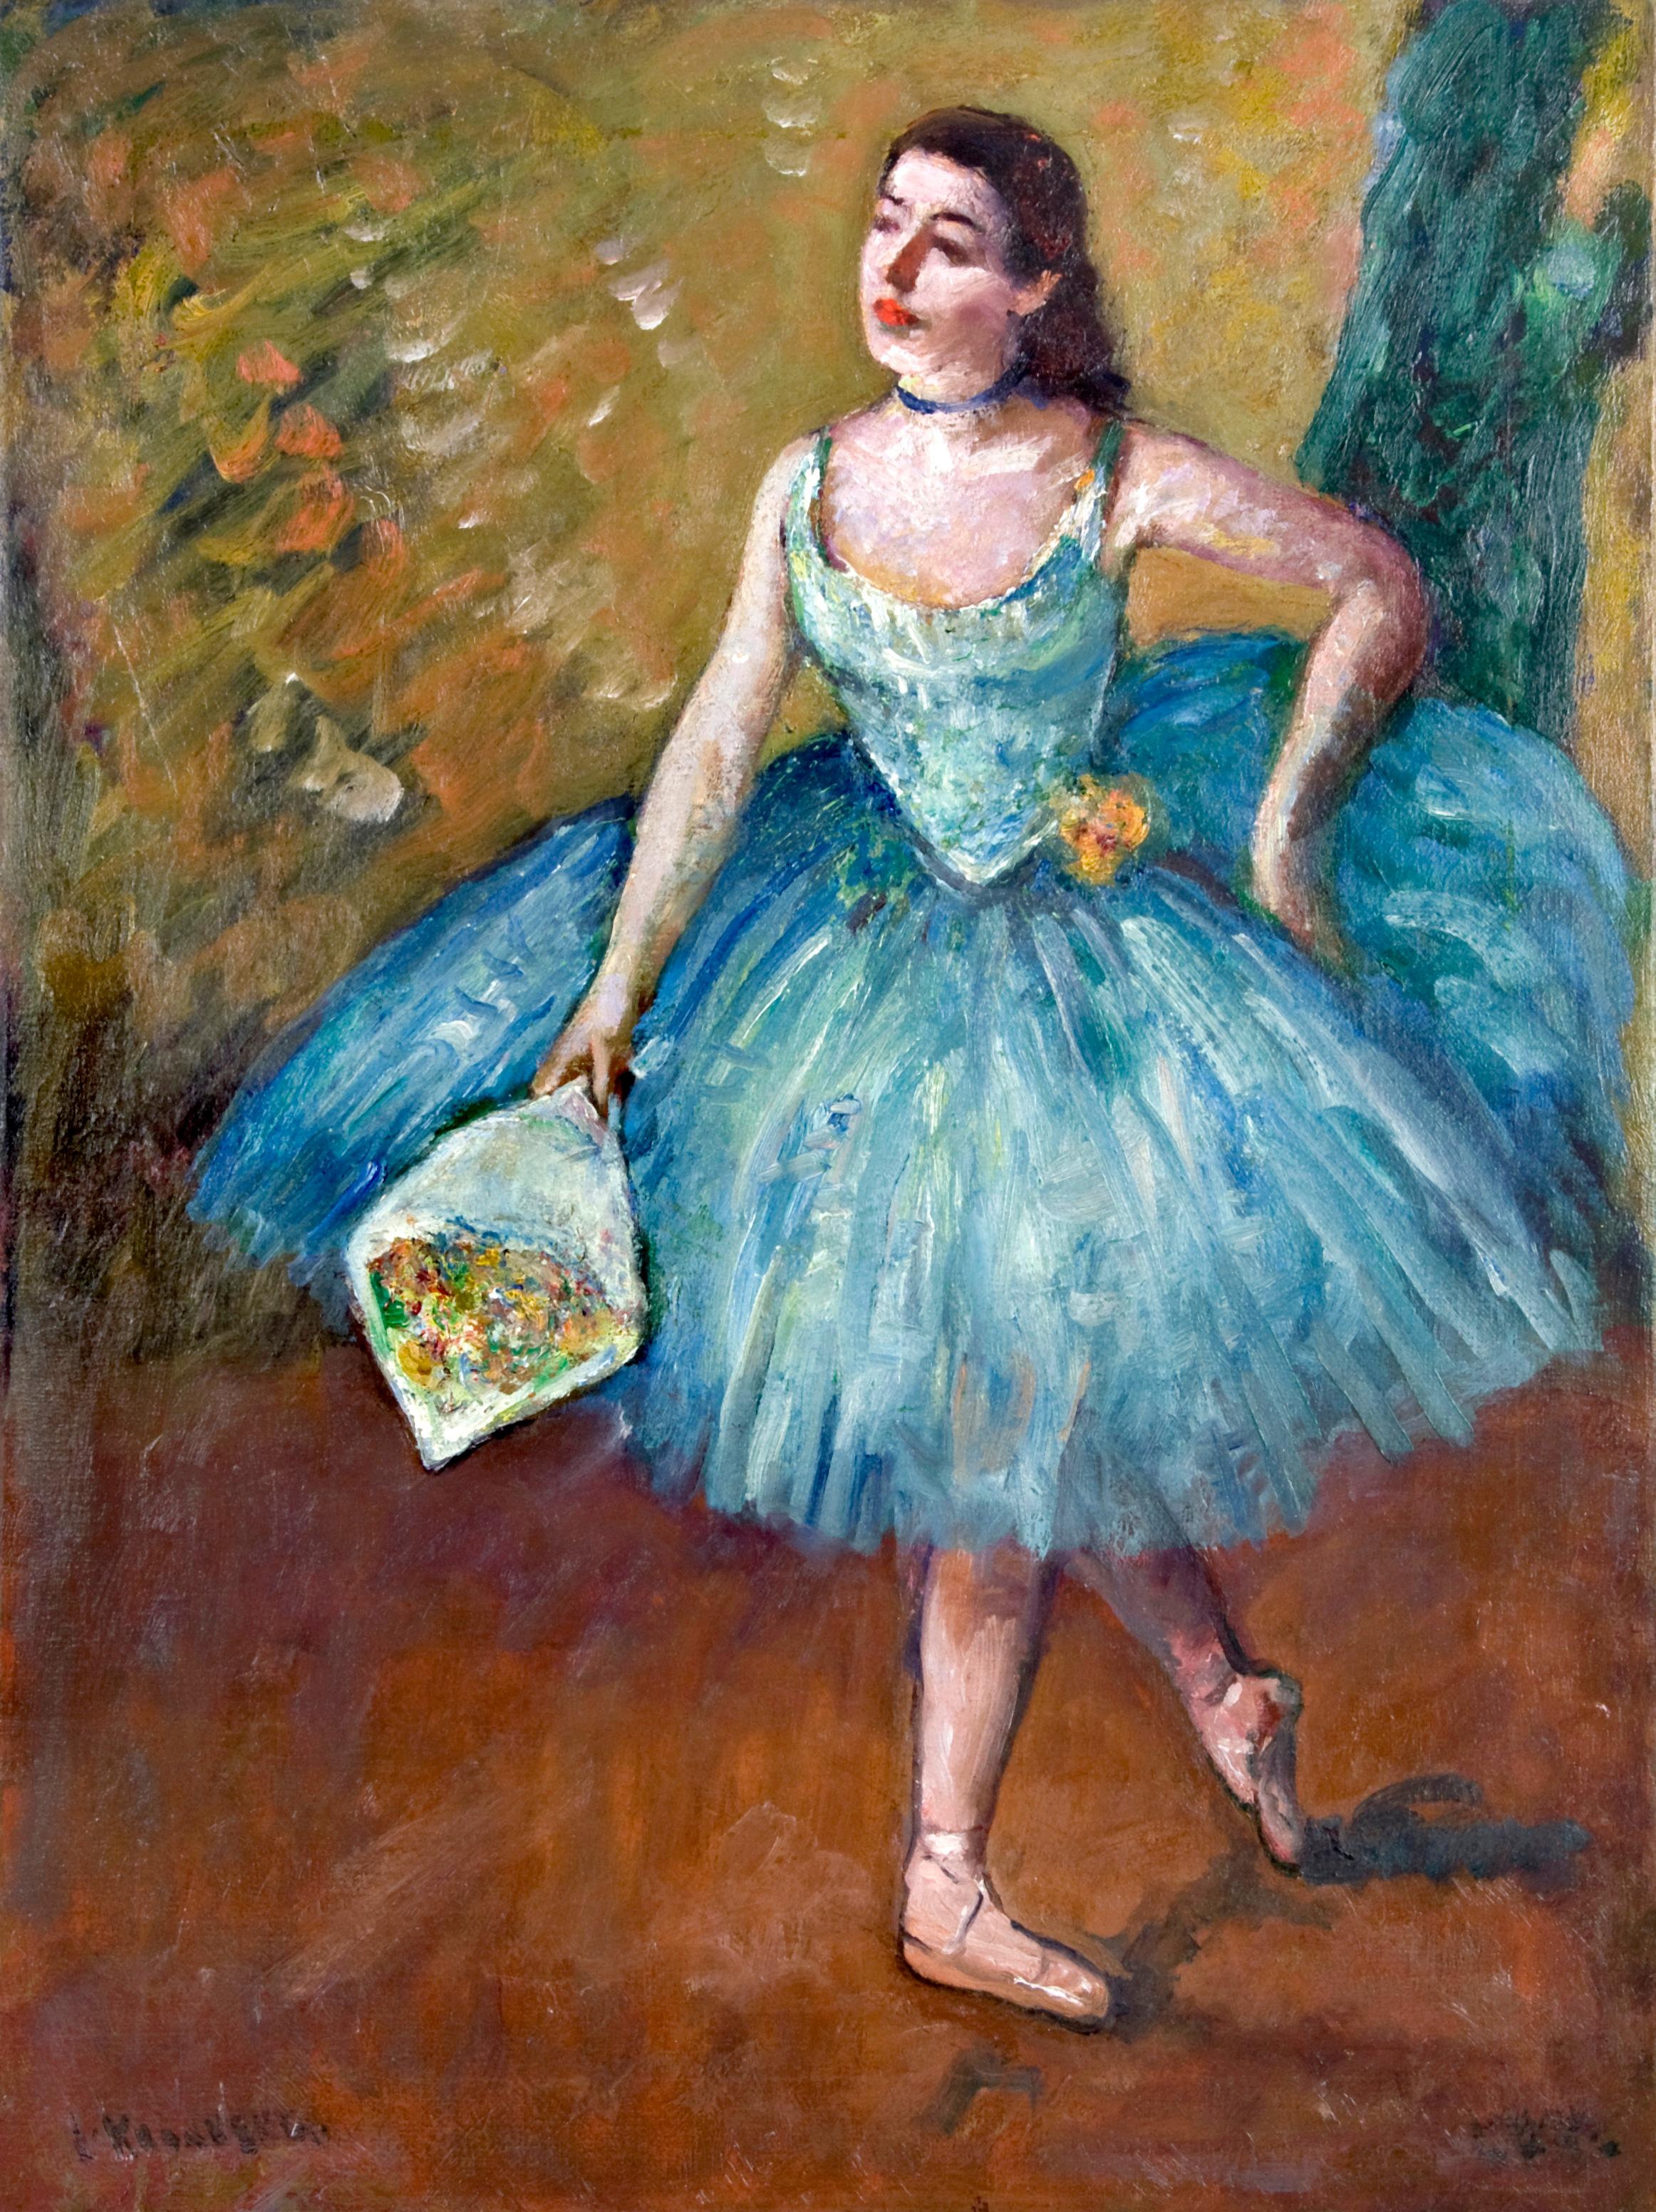 Impressionist Dancer on Canvas, 